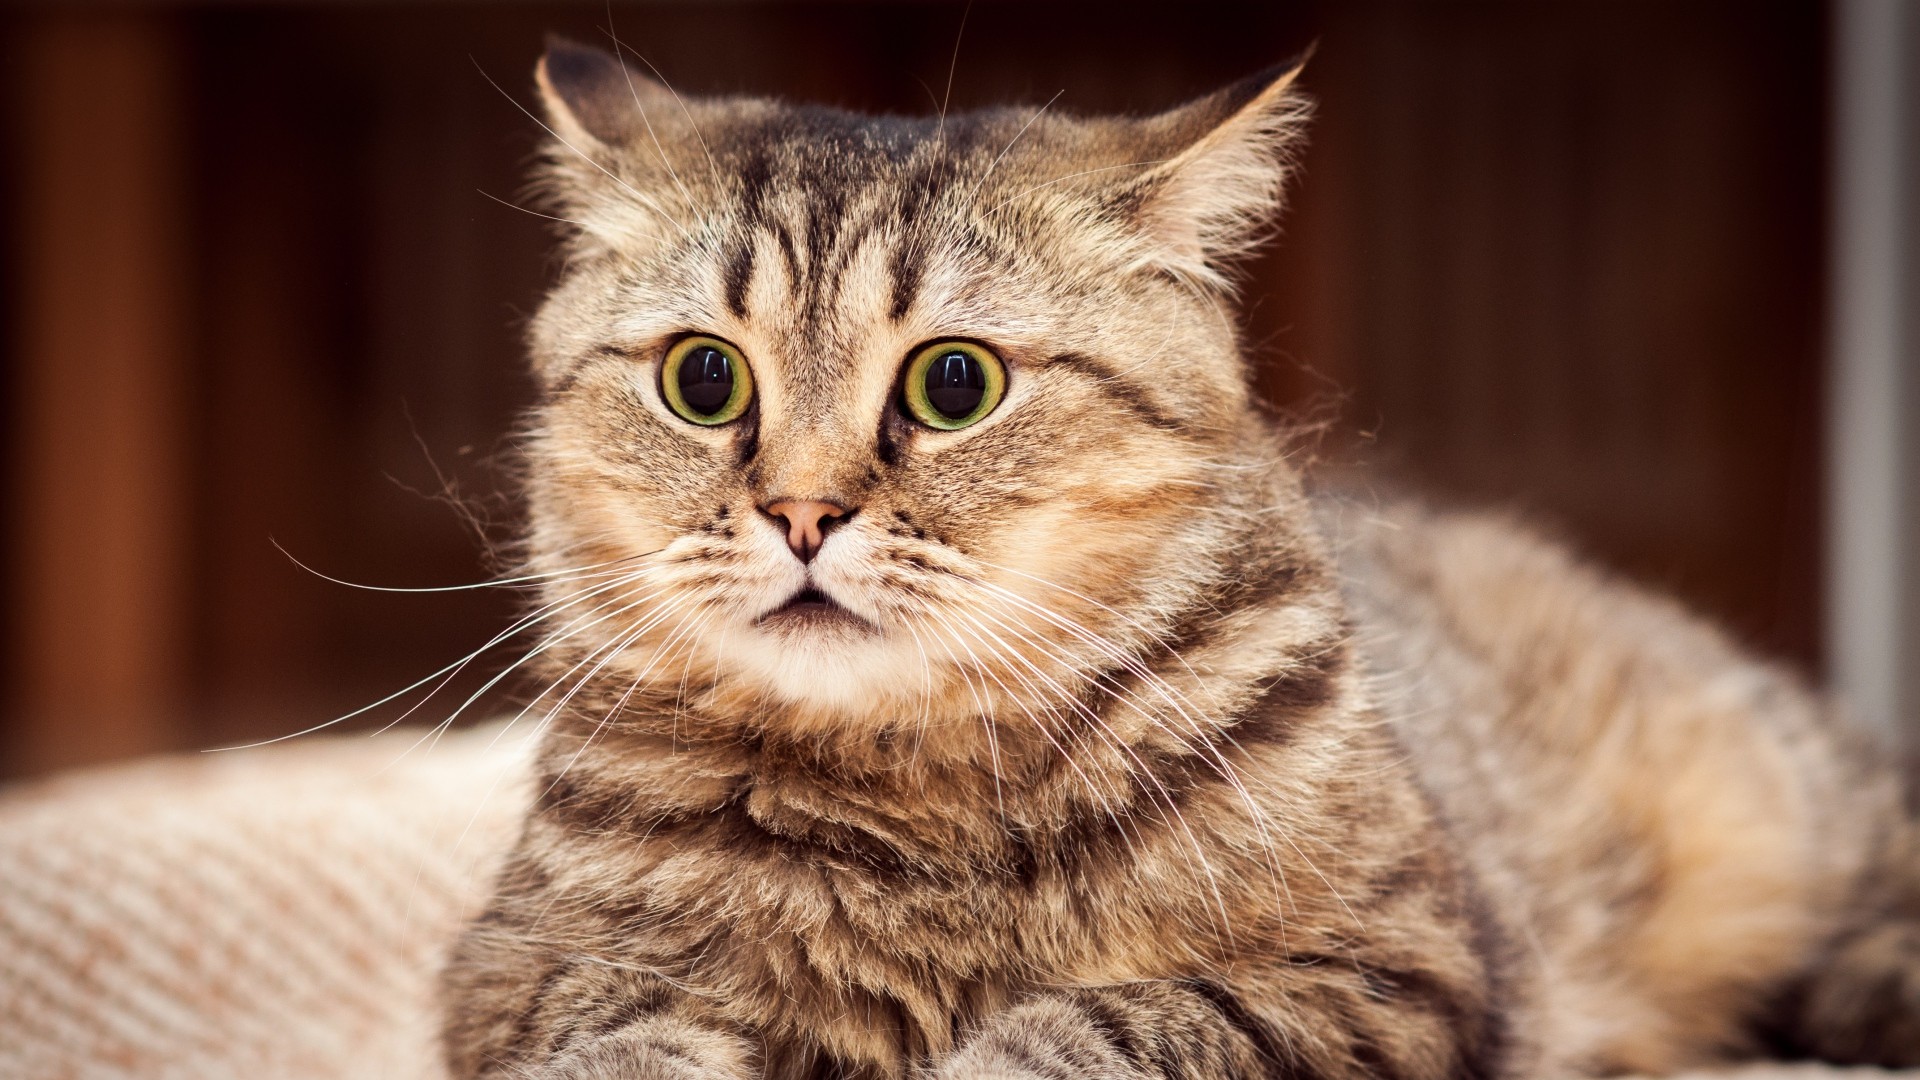 General 1920x1080 cats feline animals face eyes closeup surprised mammals indoors animal eyes yellow eyes